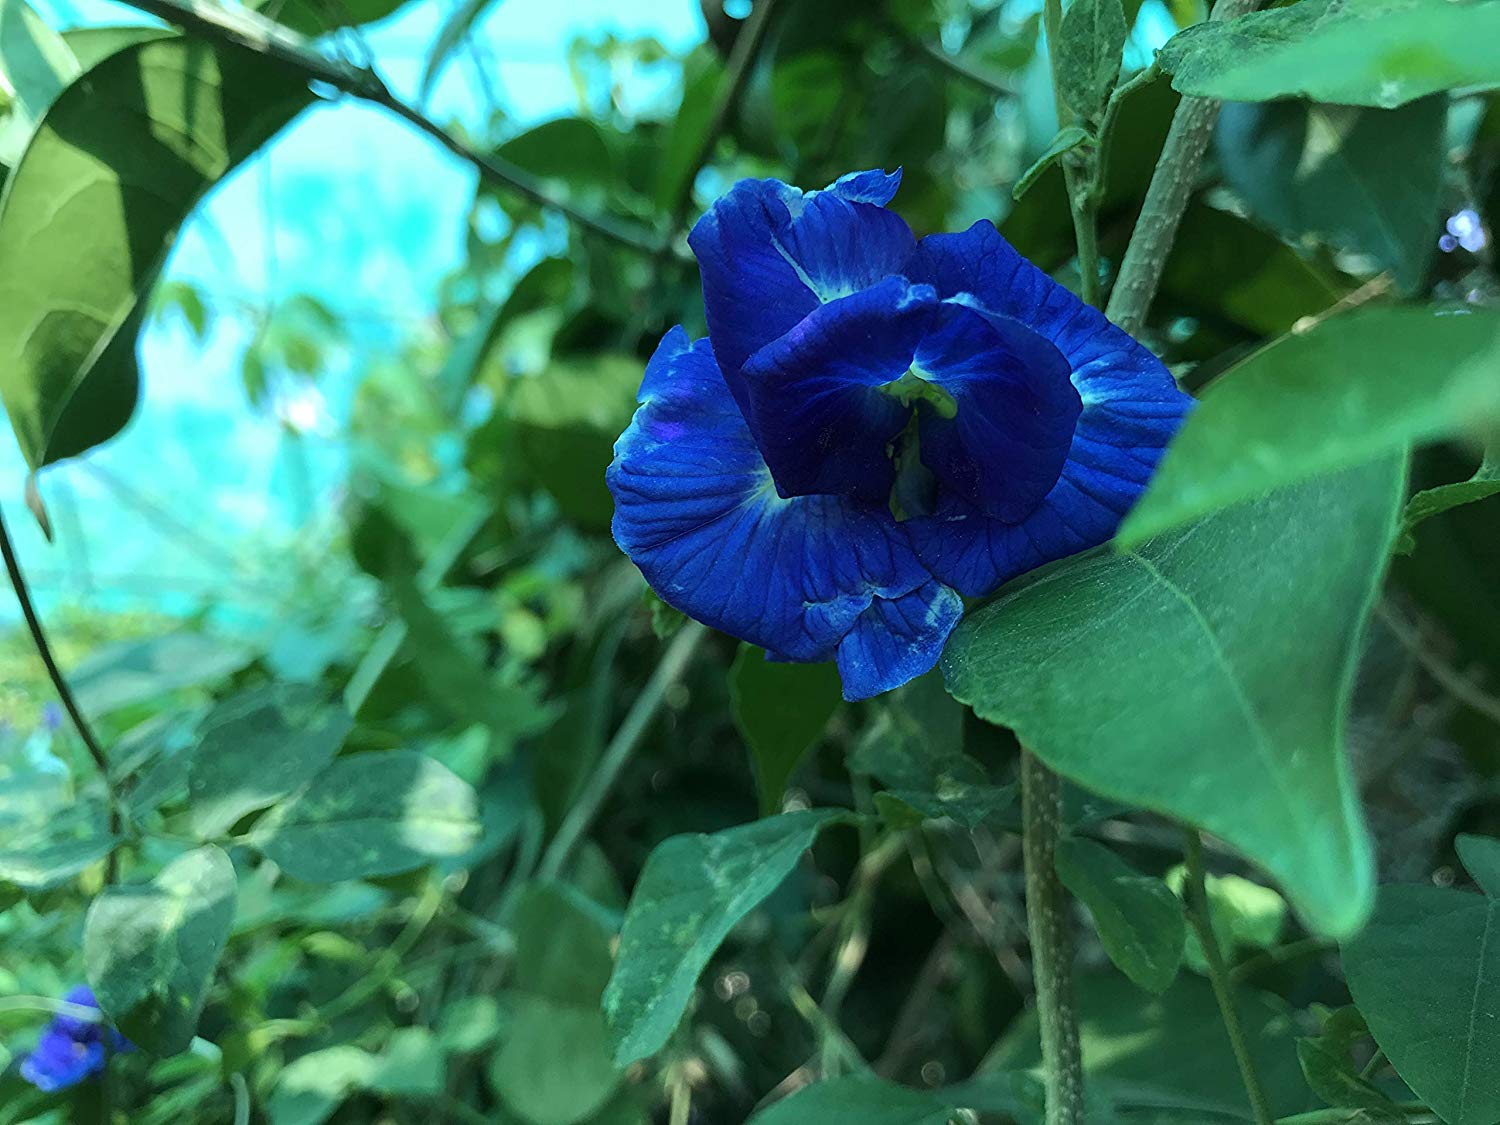 blue Green Paradise® Clitoria Ternatea butterfly pea vine five petal double layer flower plant seeds (12 seeds pack)